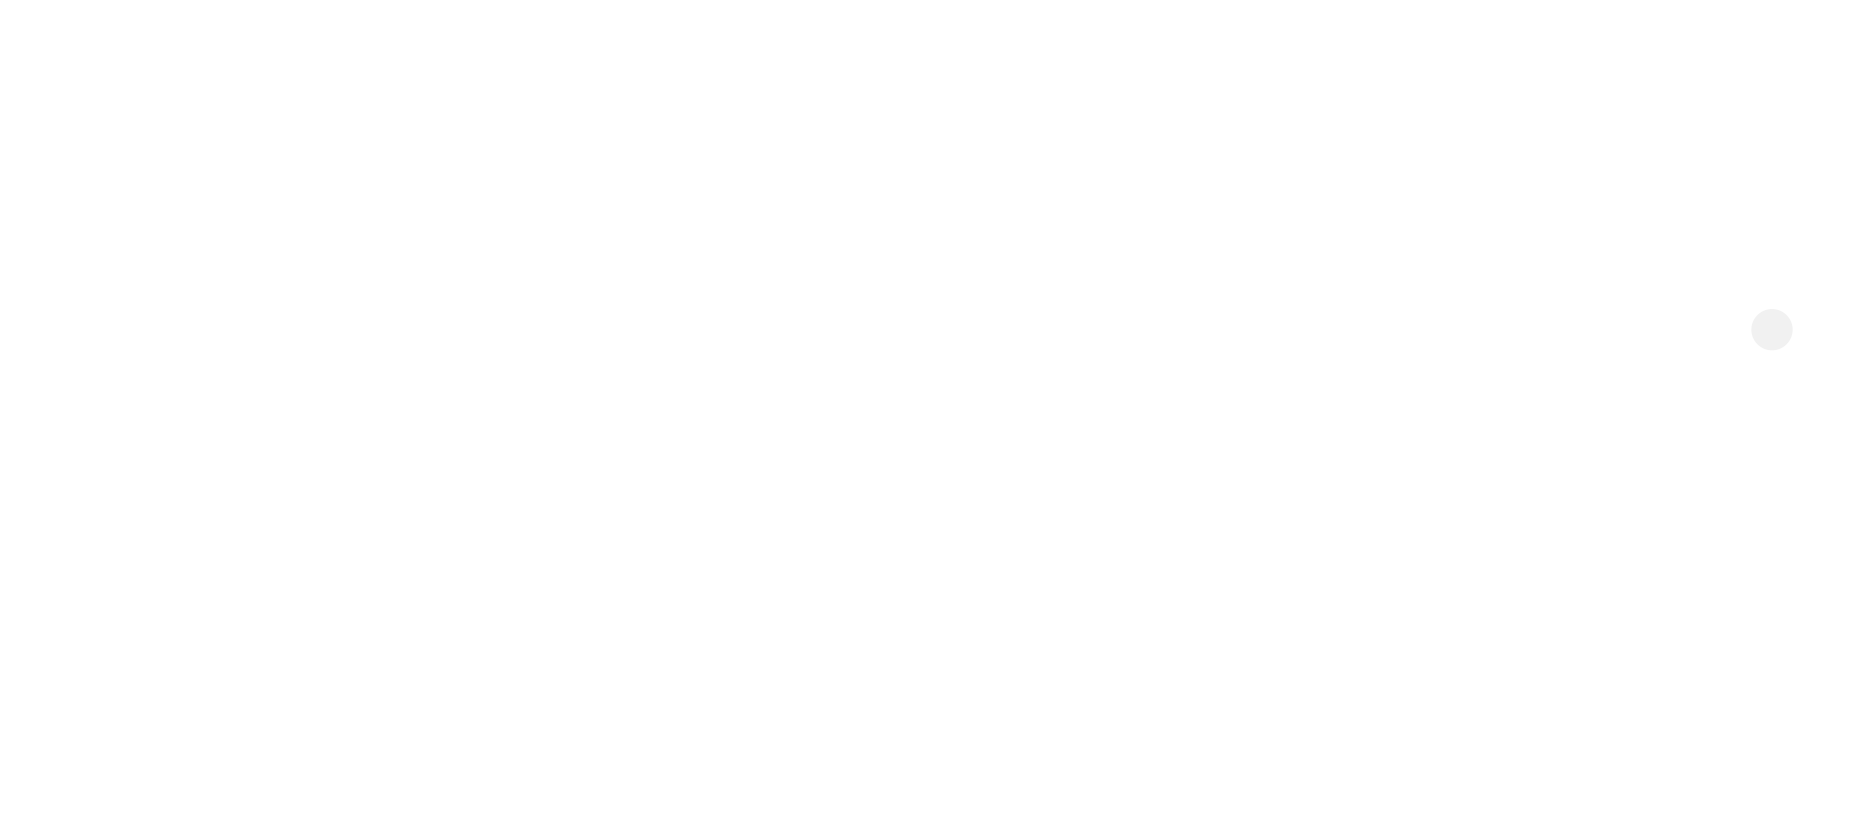 OMJ logo vaaka valkoinen 1